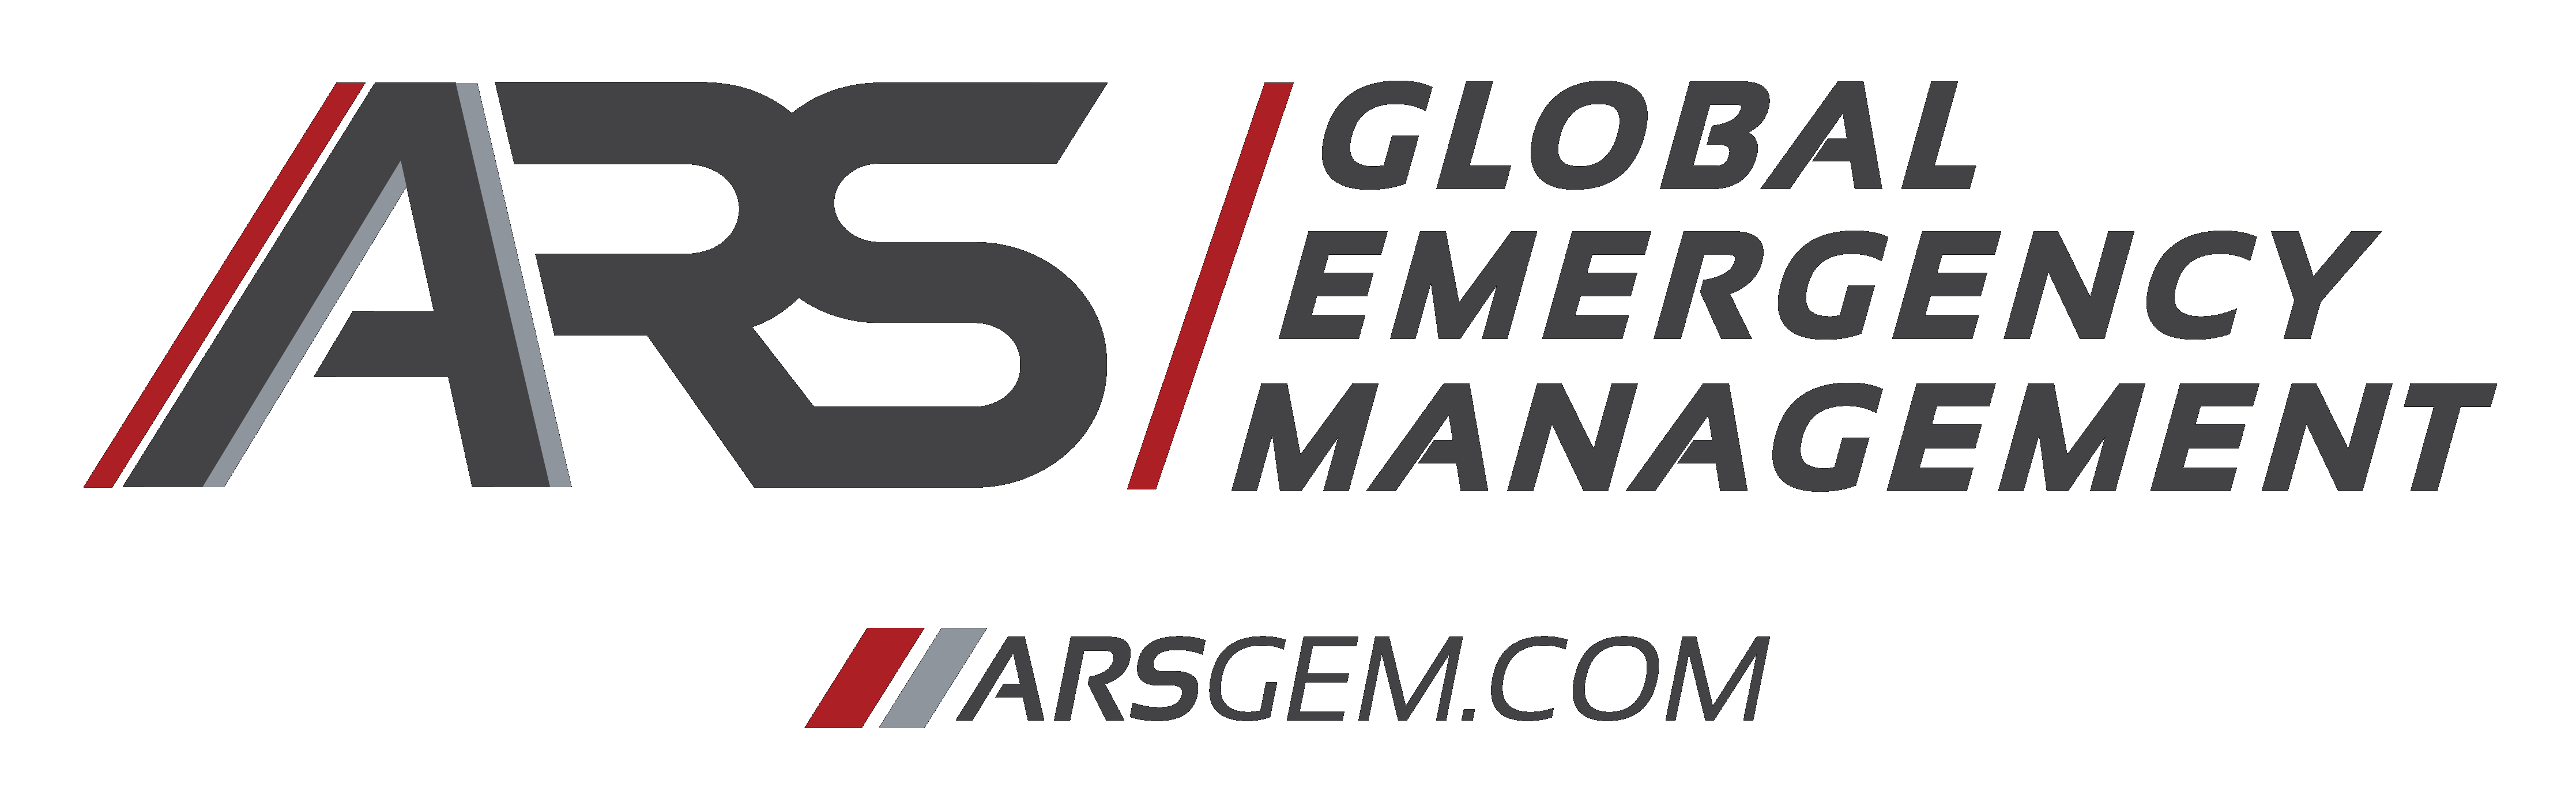 ARS / Global Emergency Management